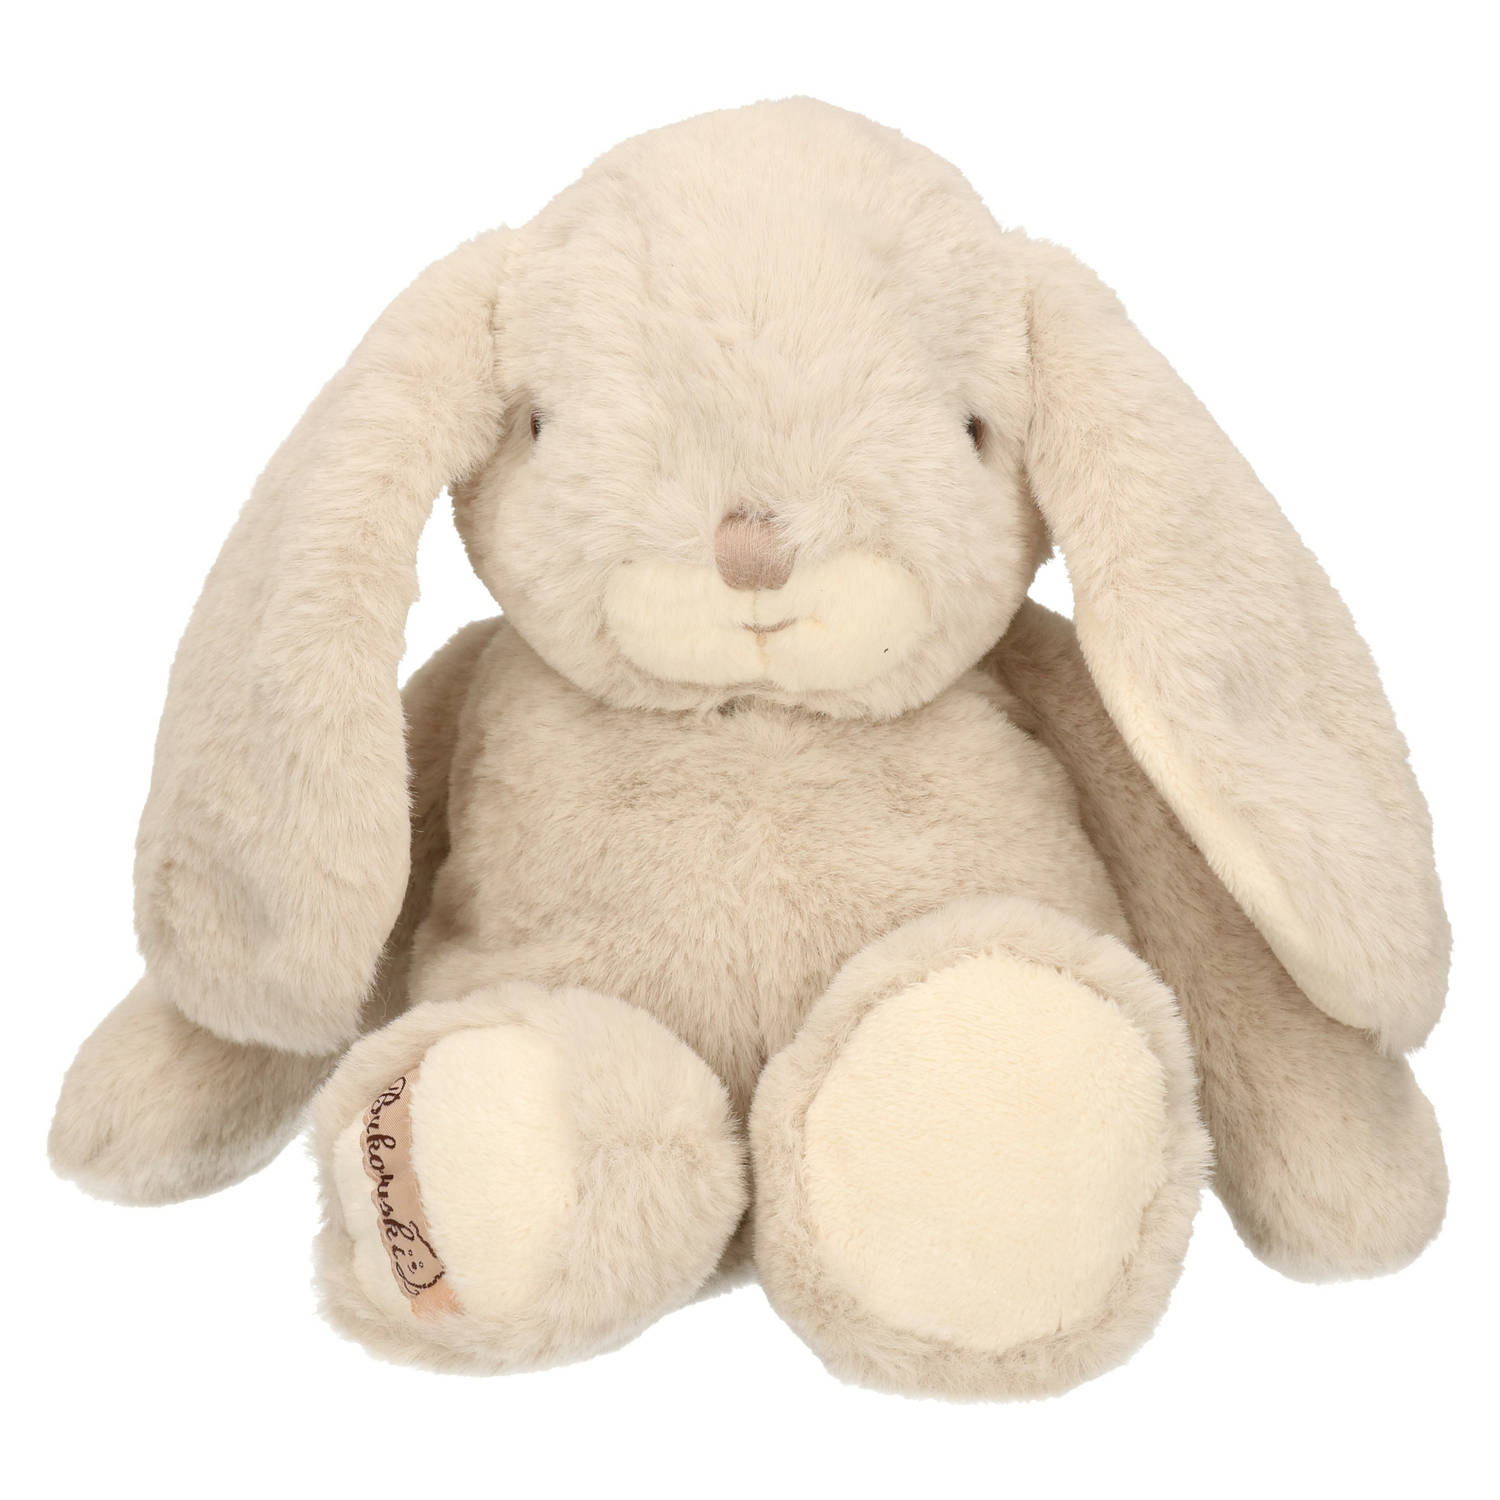 Bukowski pluche konijn knuffeldier - lichtgrijs - staand - 25 cm - Luxe kwaliteit knuffels